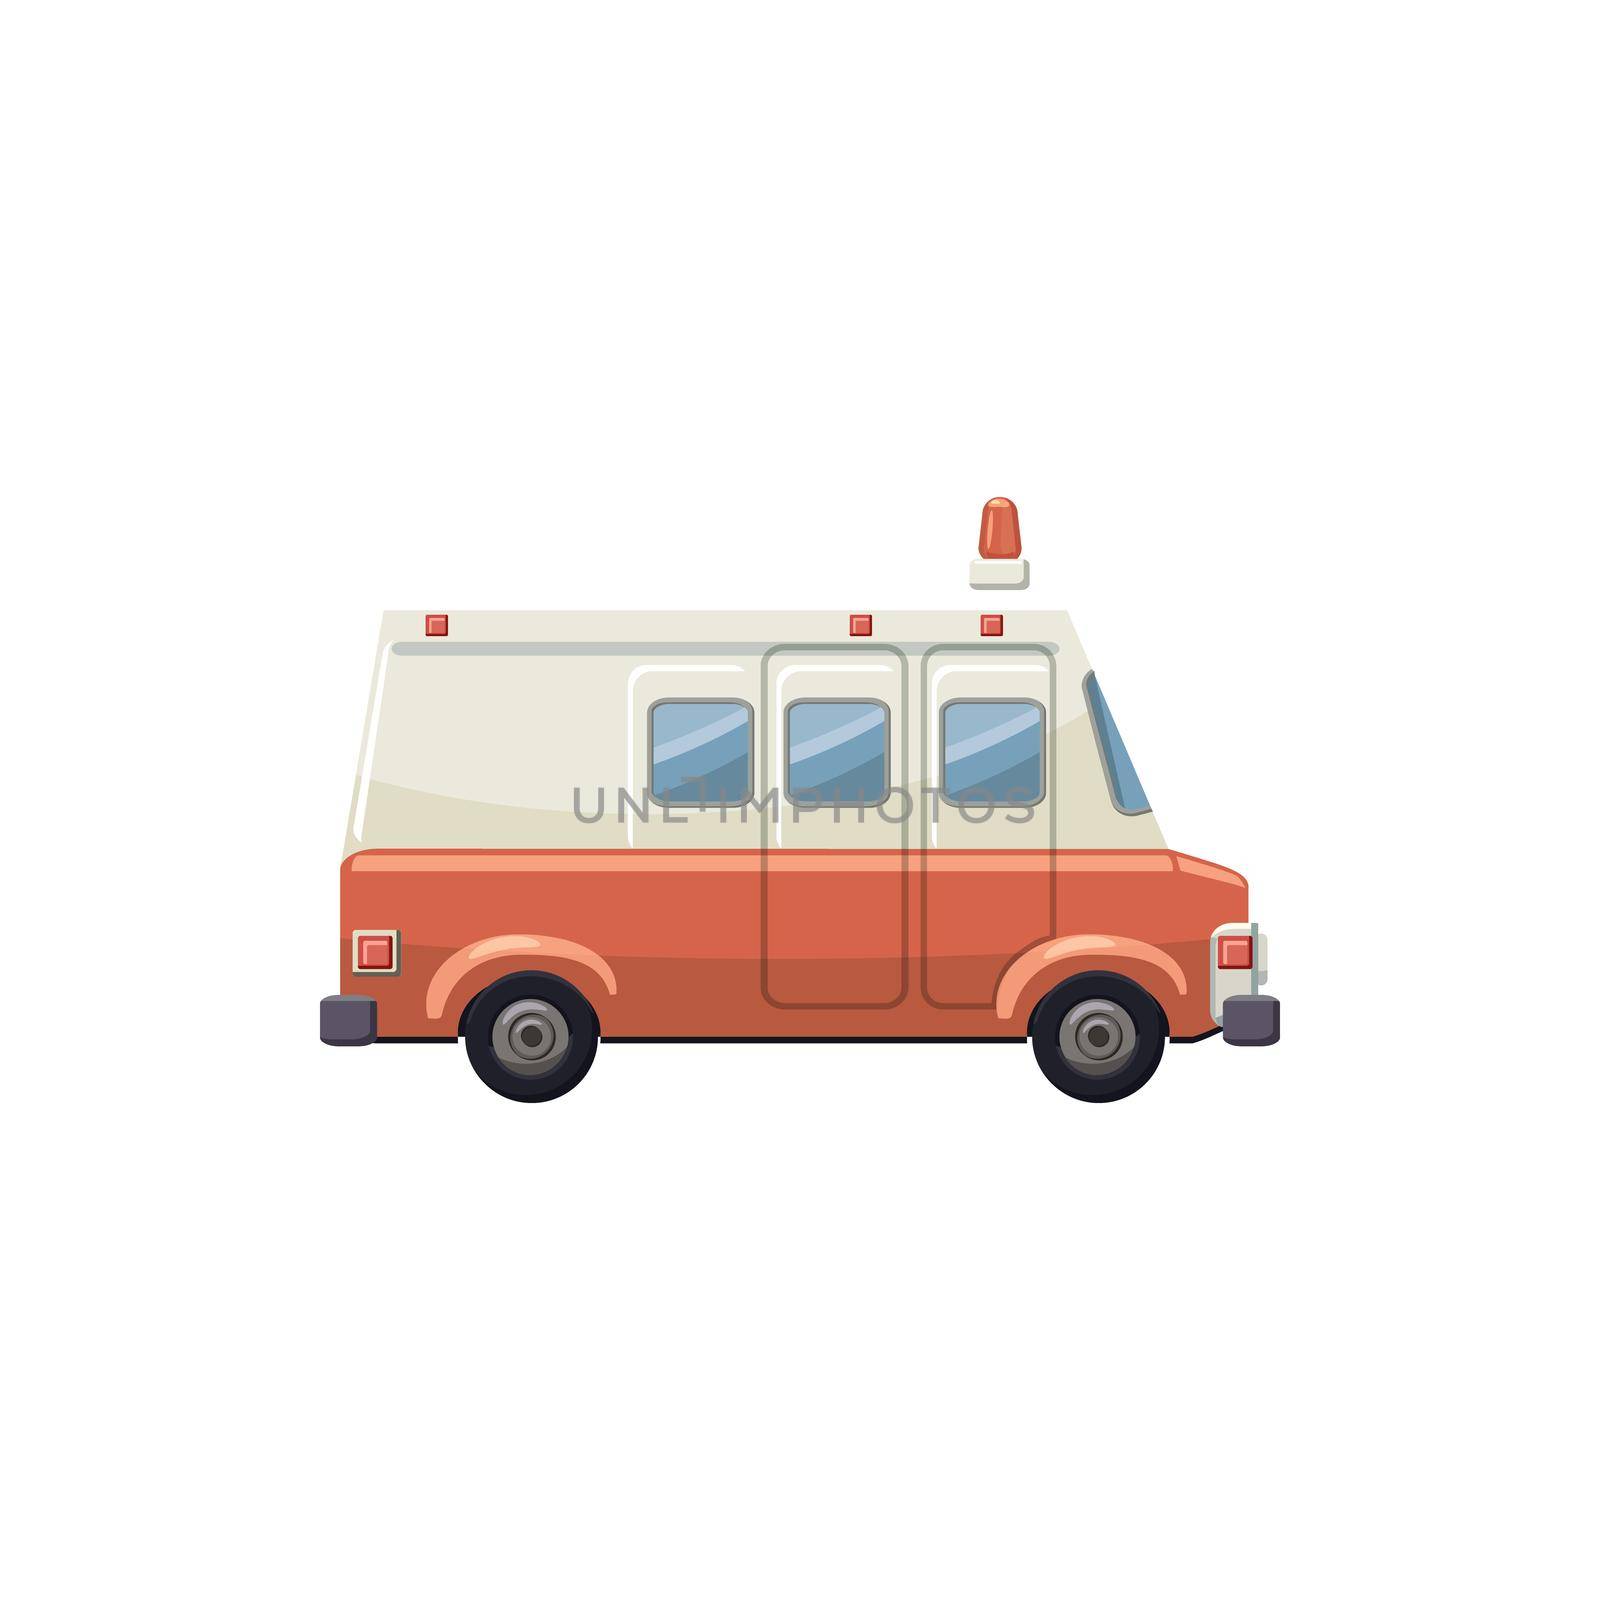 Ambulance car icon, cartoon style by ylivdesign